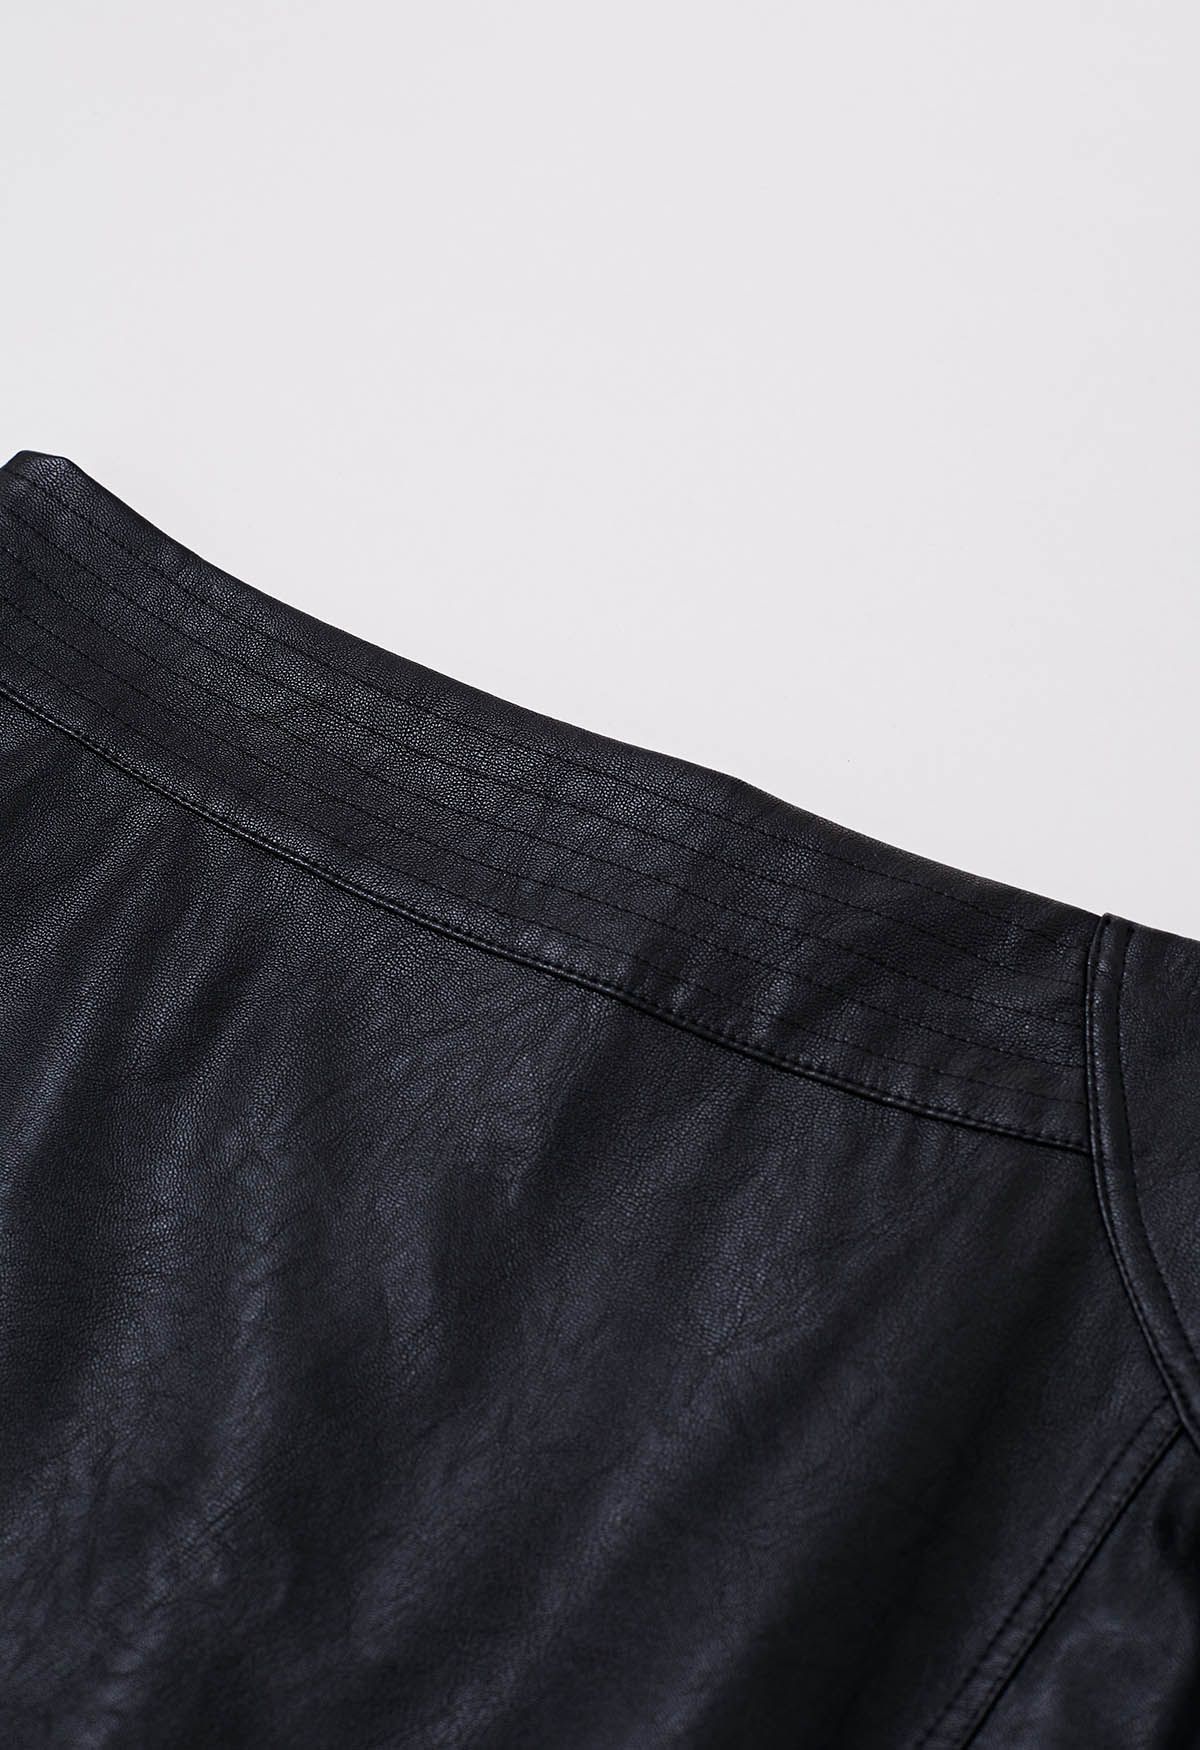 Irregular Hem Faux Leather Mini Skirt in Black